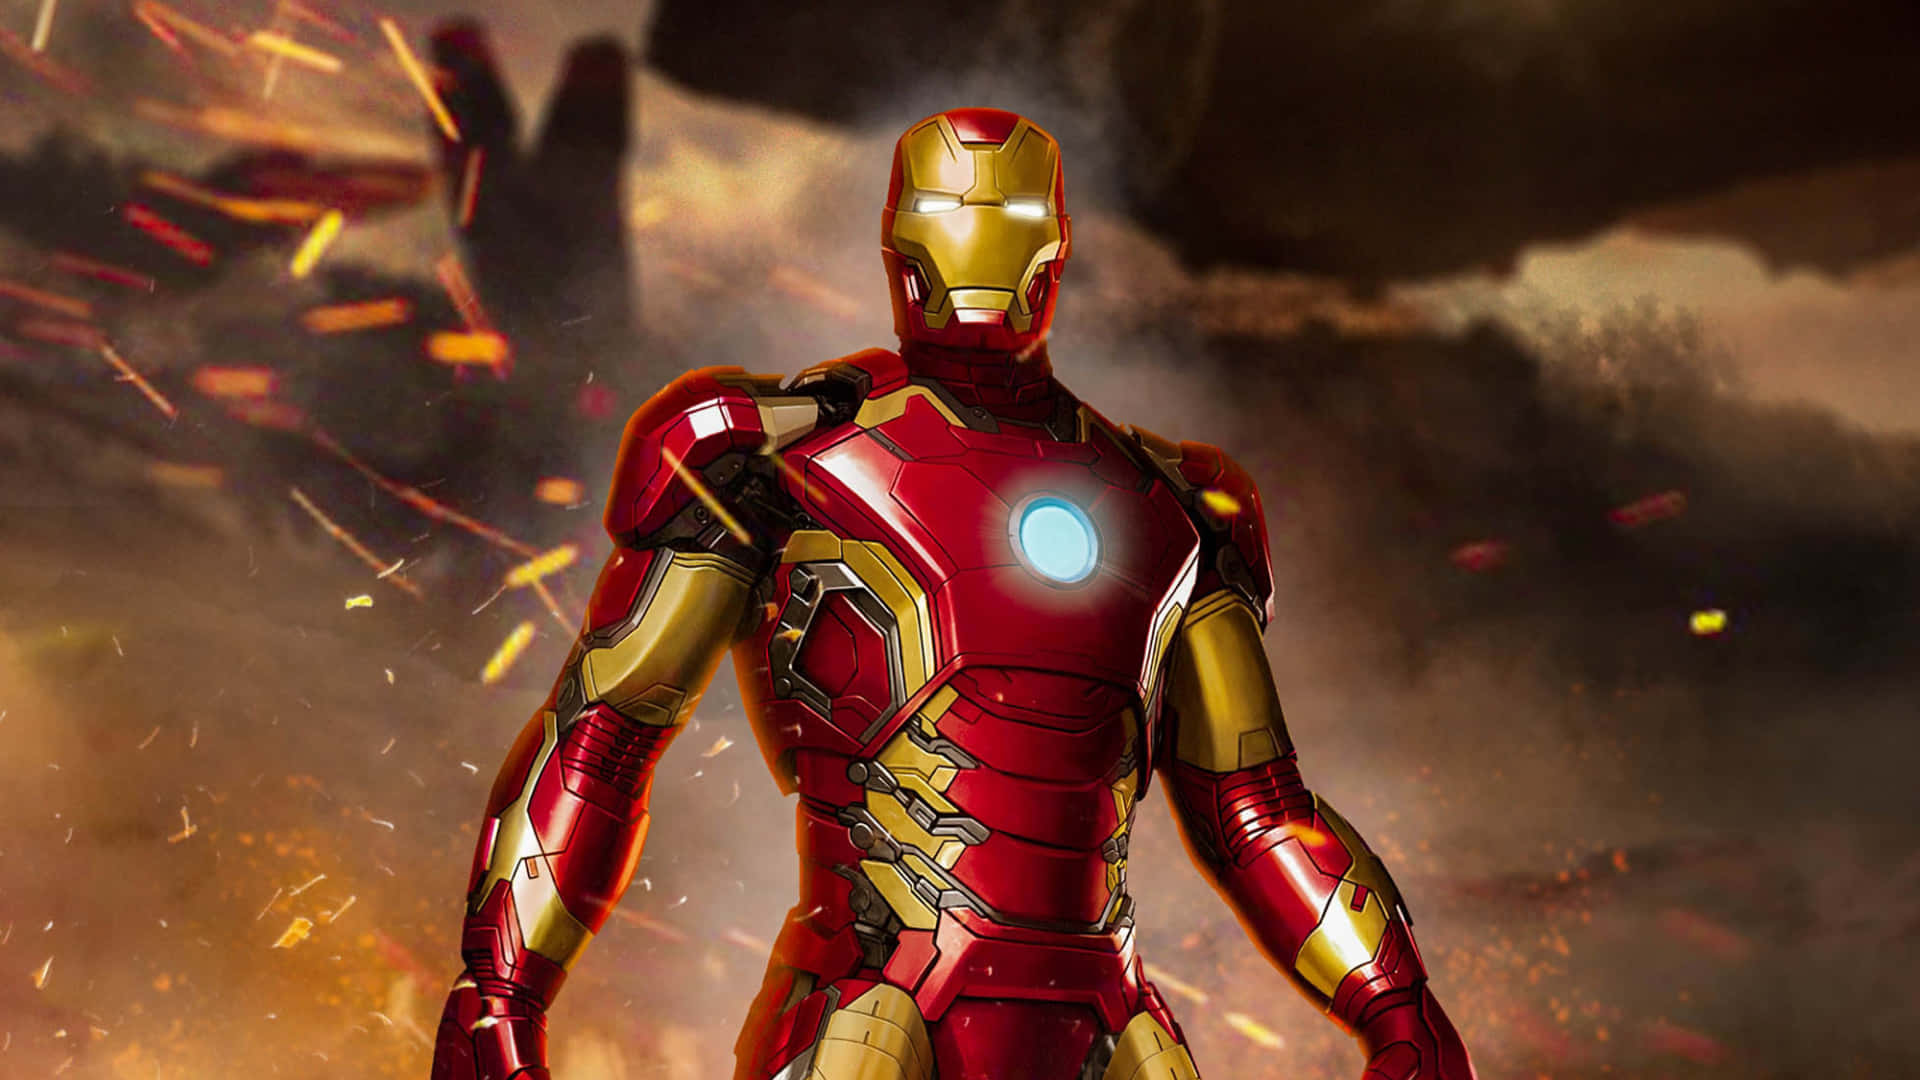 Immagineestetica Di Iron Man In Fiamme.